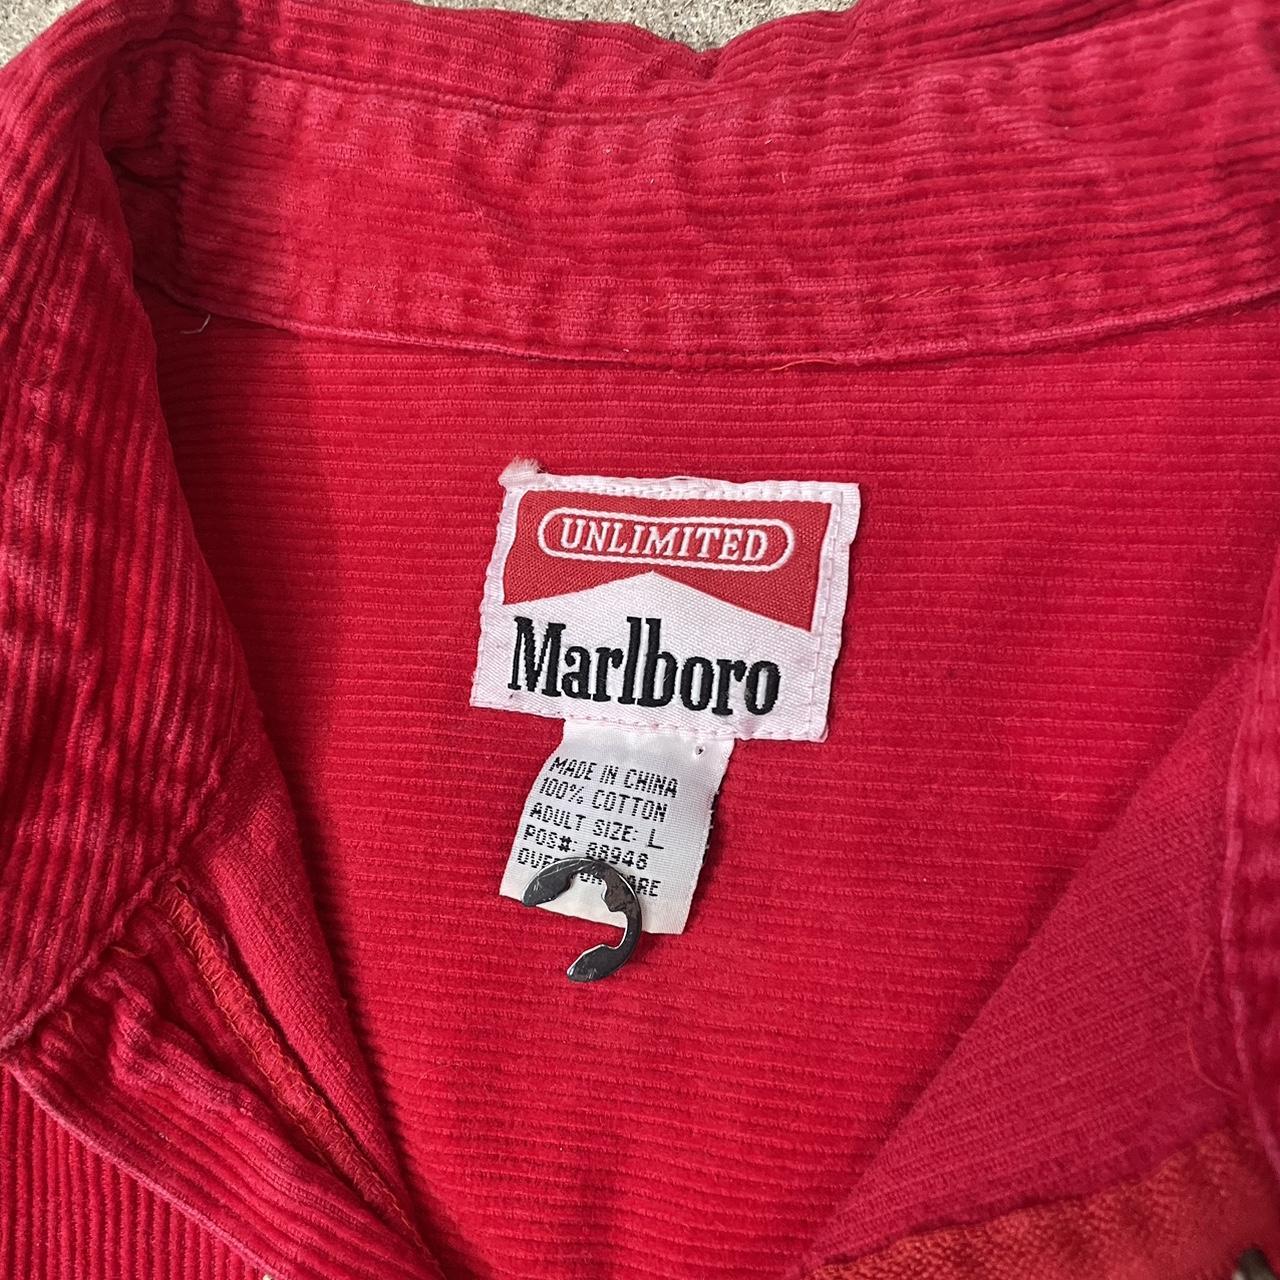 Marlboro Men's Red Shirt | Depop